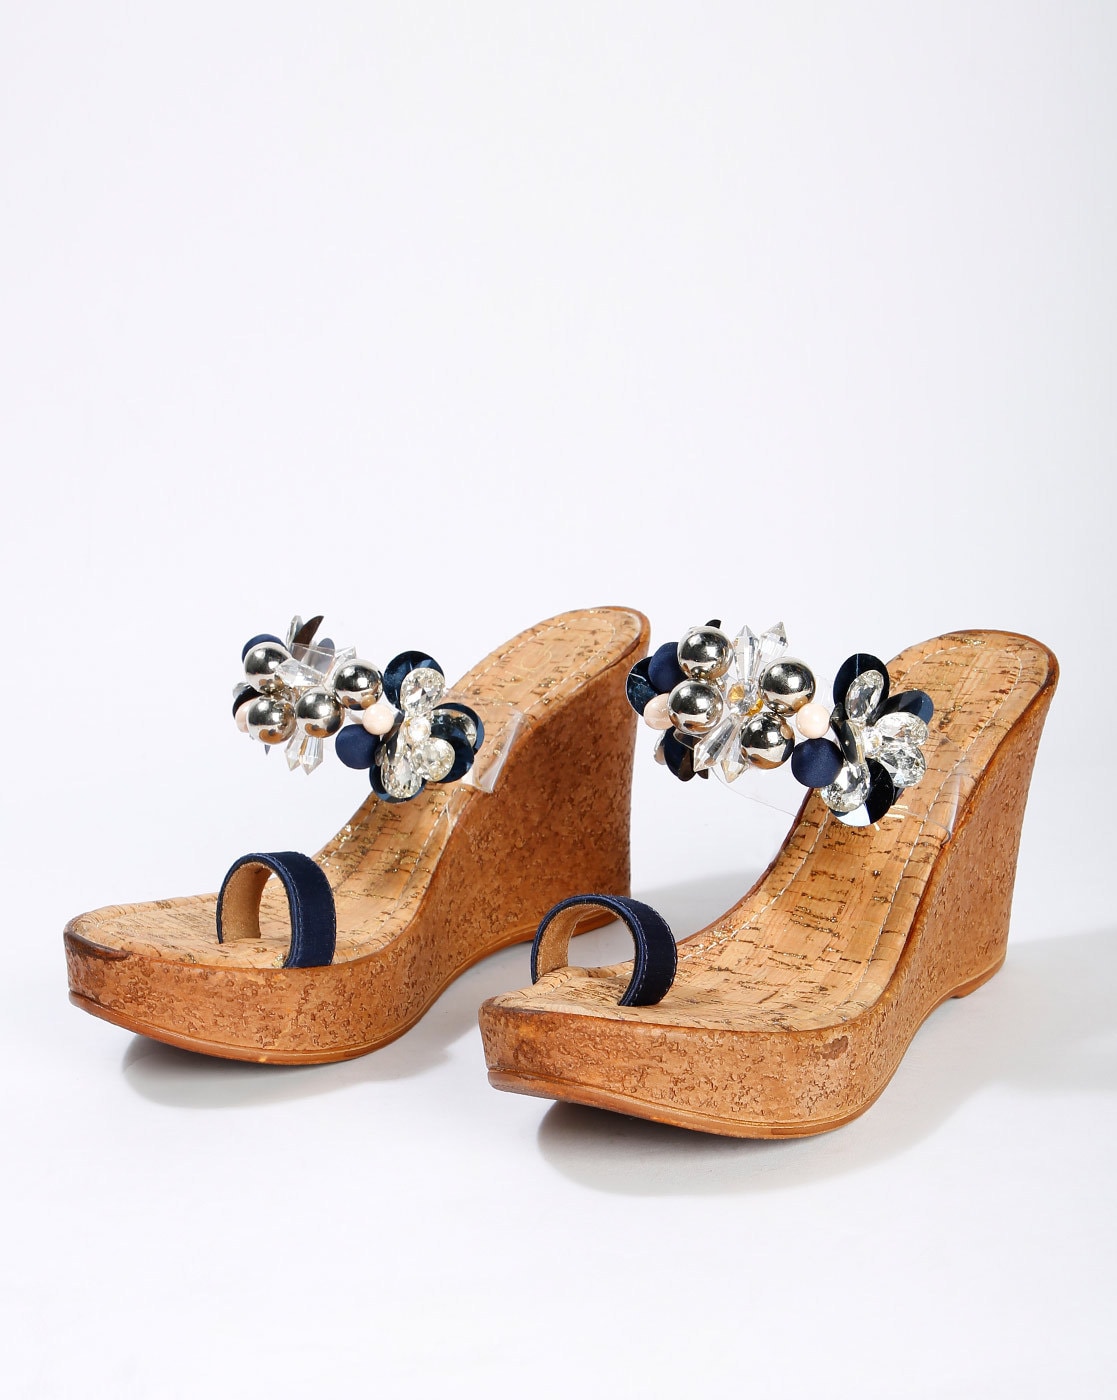 heels with embellishment